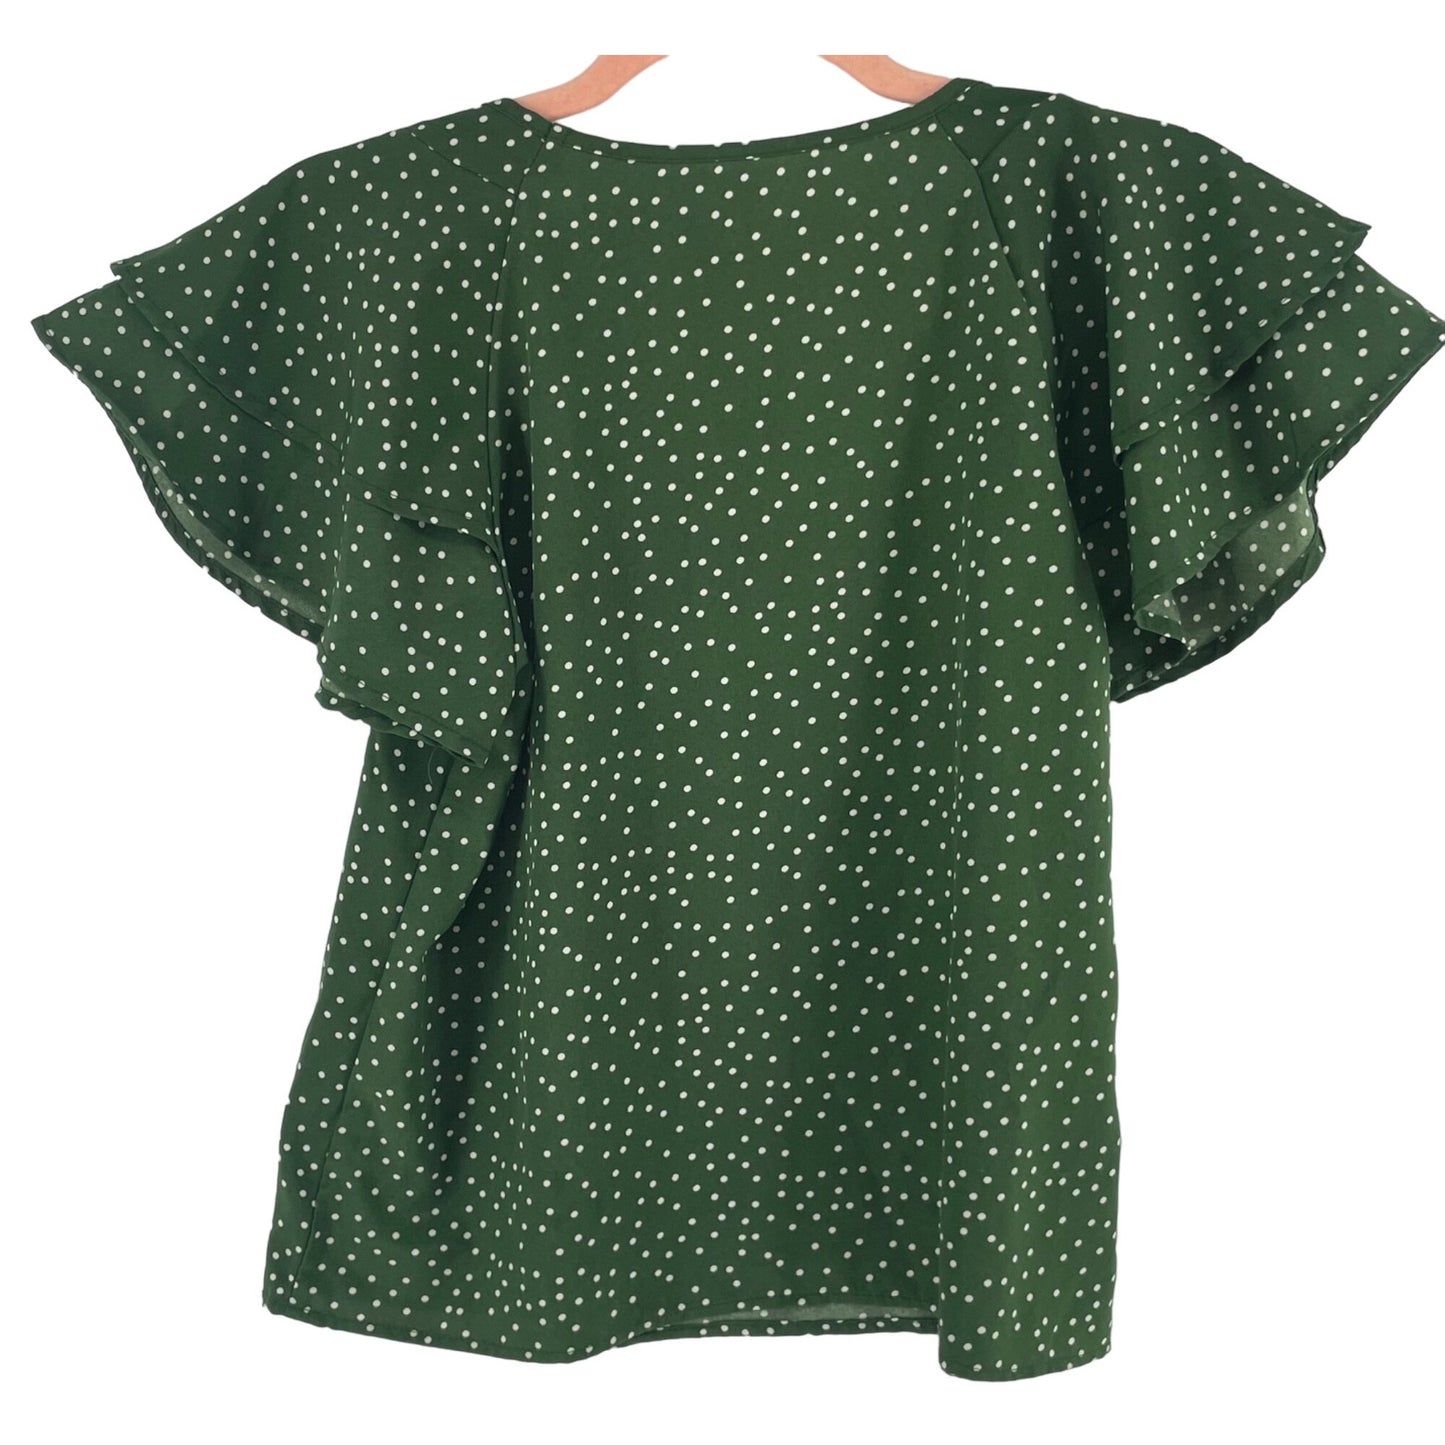 Shein Women's Size Small Green & White Polka Dot Ruffle Top